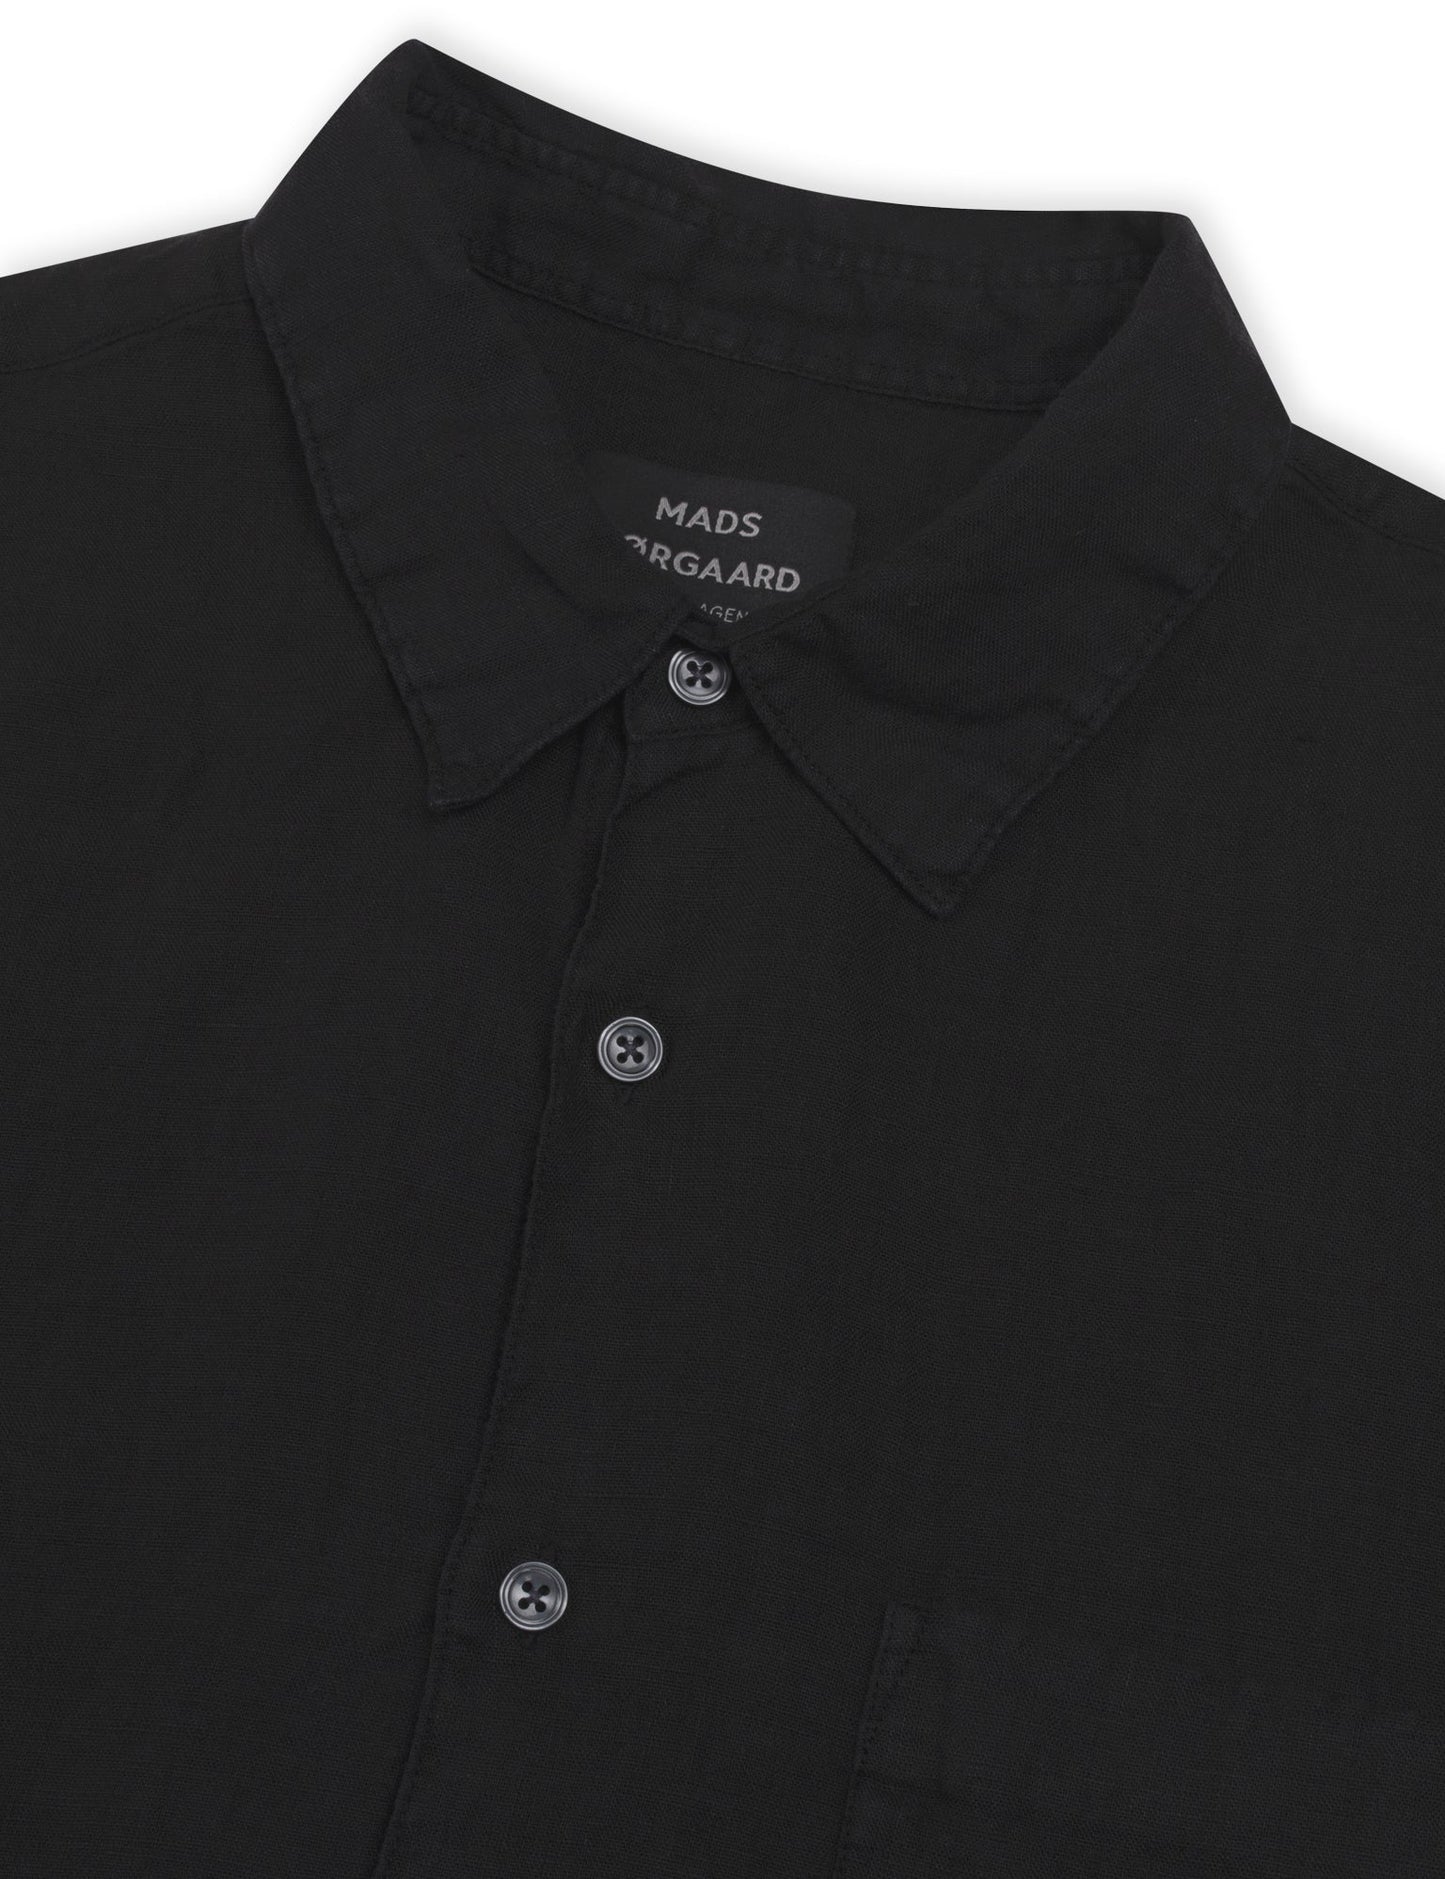 Dyed Linen Victor Shirt SS, Black